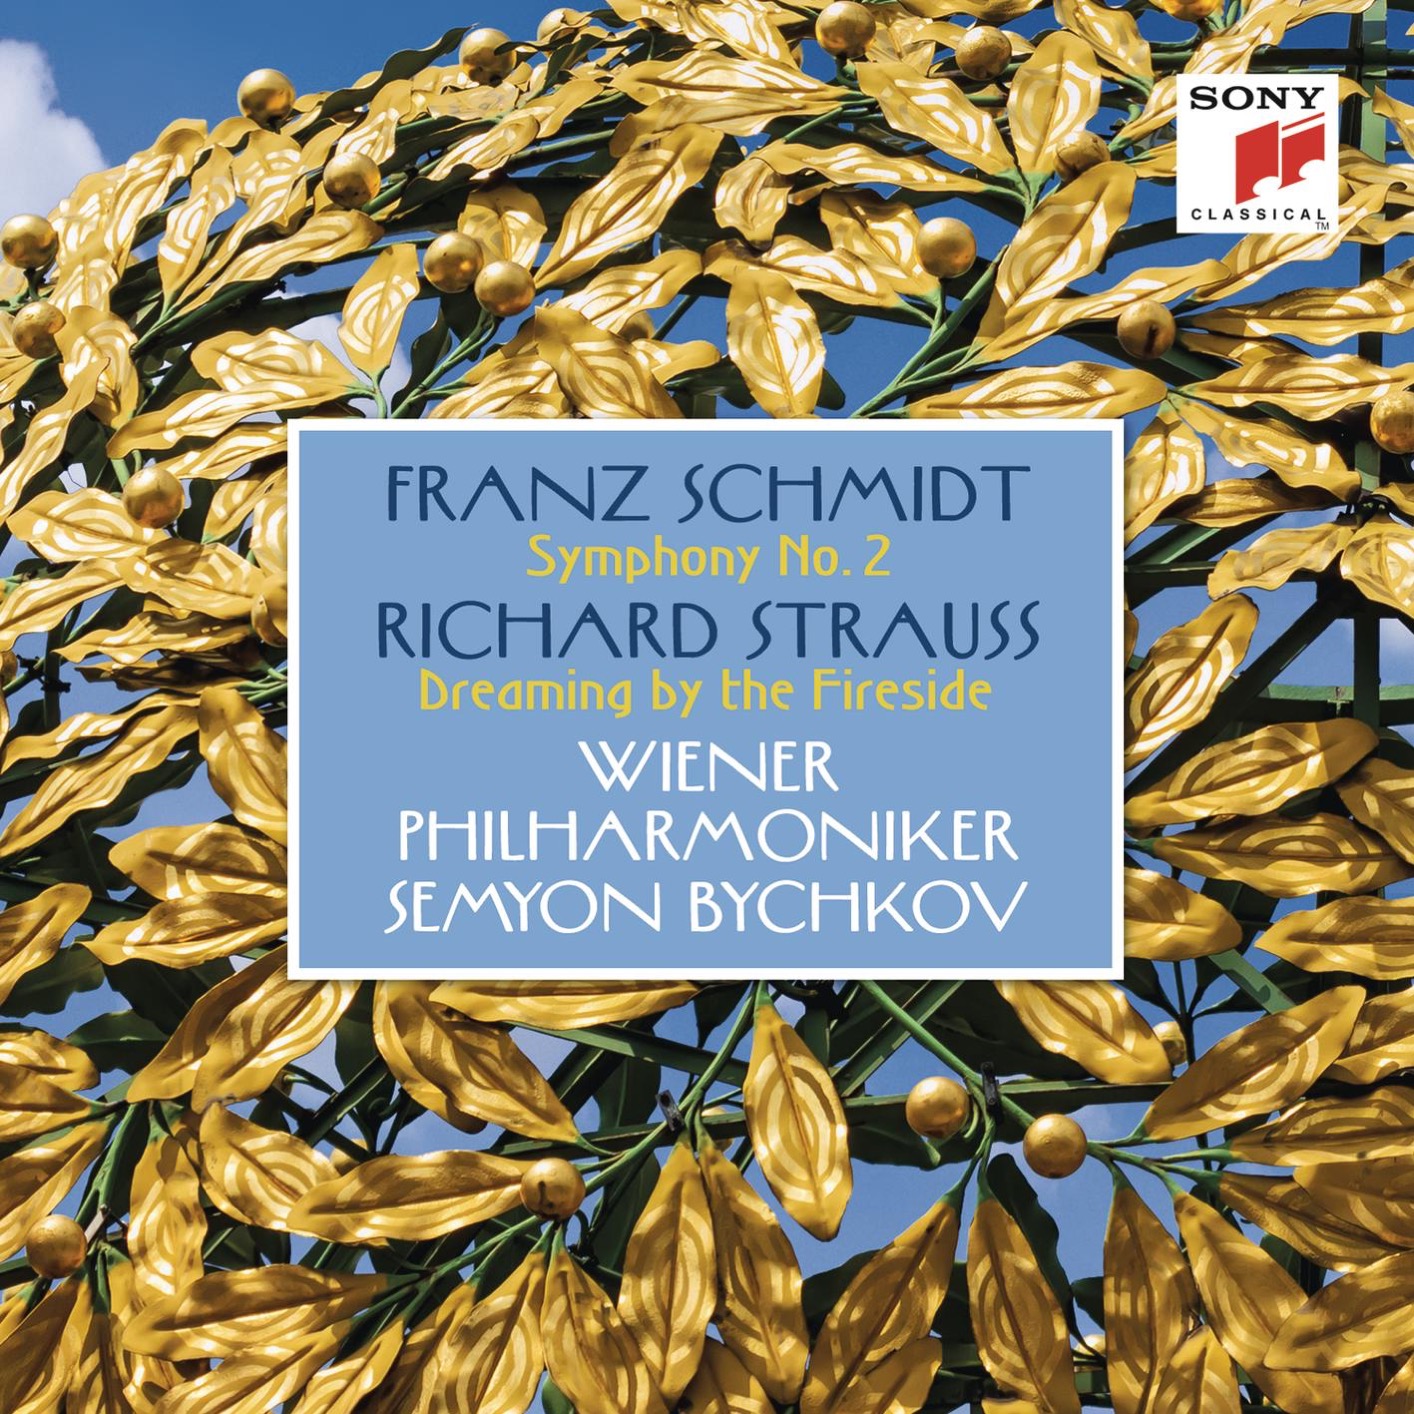 Semyon Bychkov, Wiener Philharmoniker - Schmidt: Symphony No. 2 - Strauss: Dreaming by the Fireside (2017) [Qobuz FLAC 24bit/48kHz]